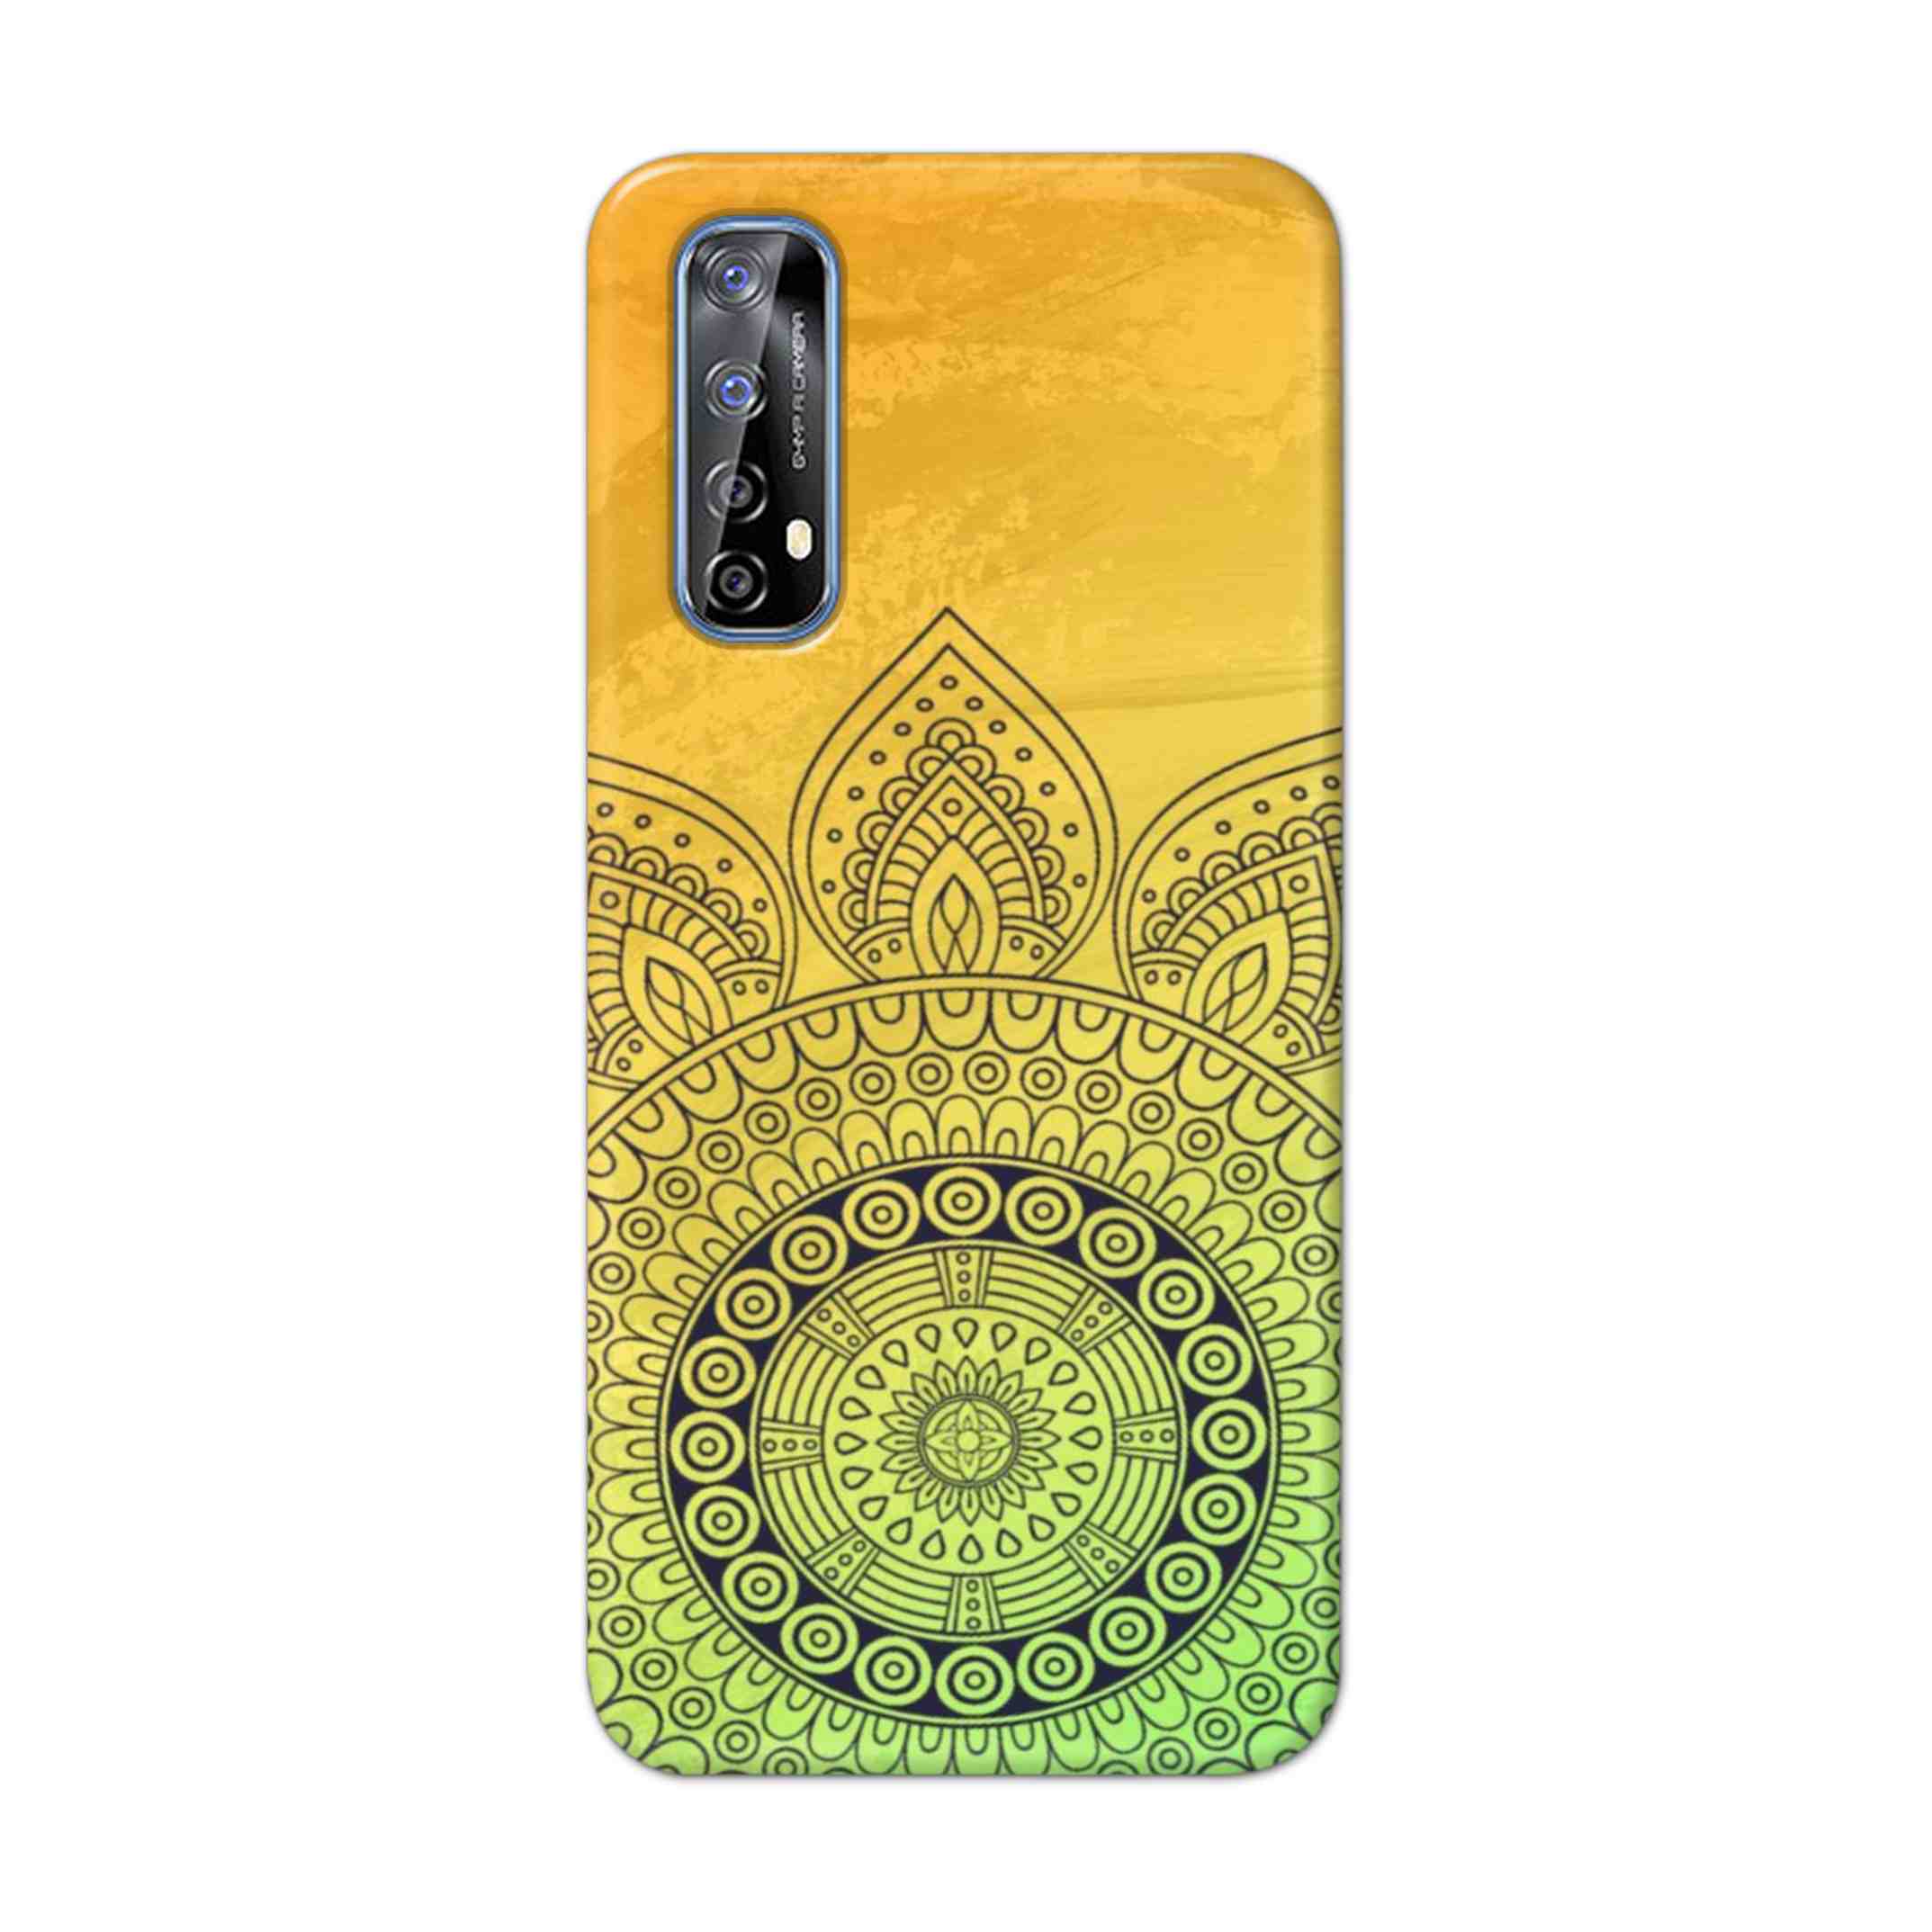 Buy Yellow Rangoli Hard Back Mobile Phone Case Cover For Realme 7 Online